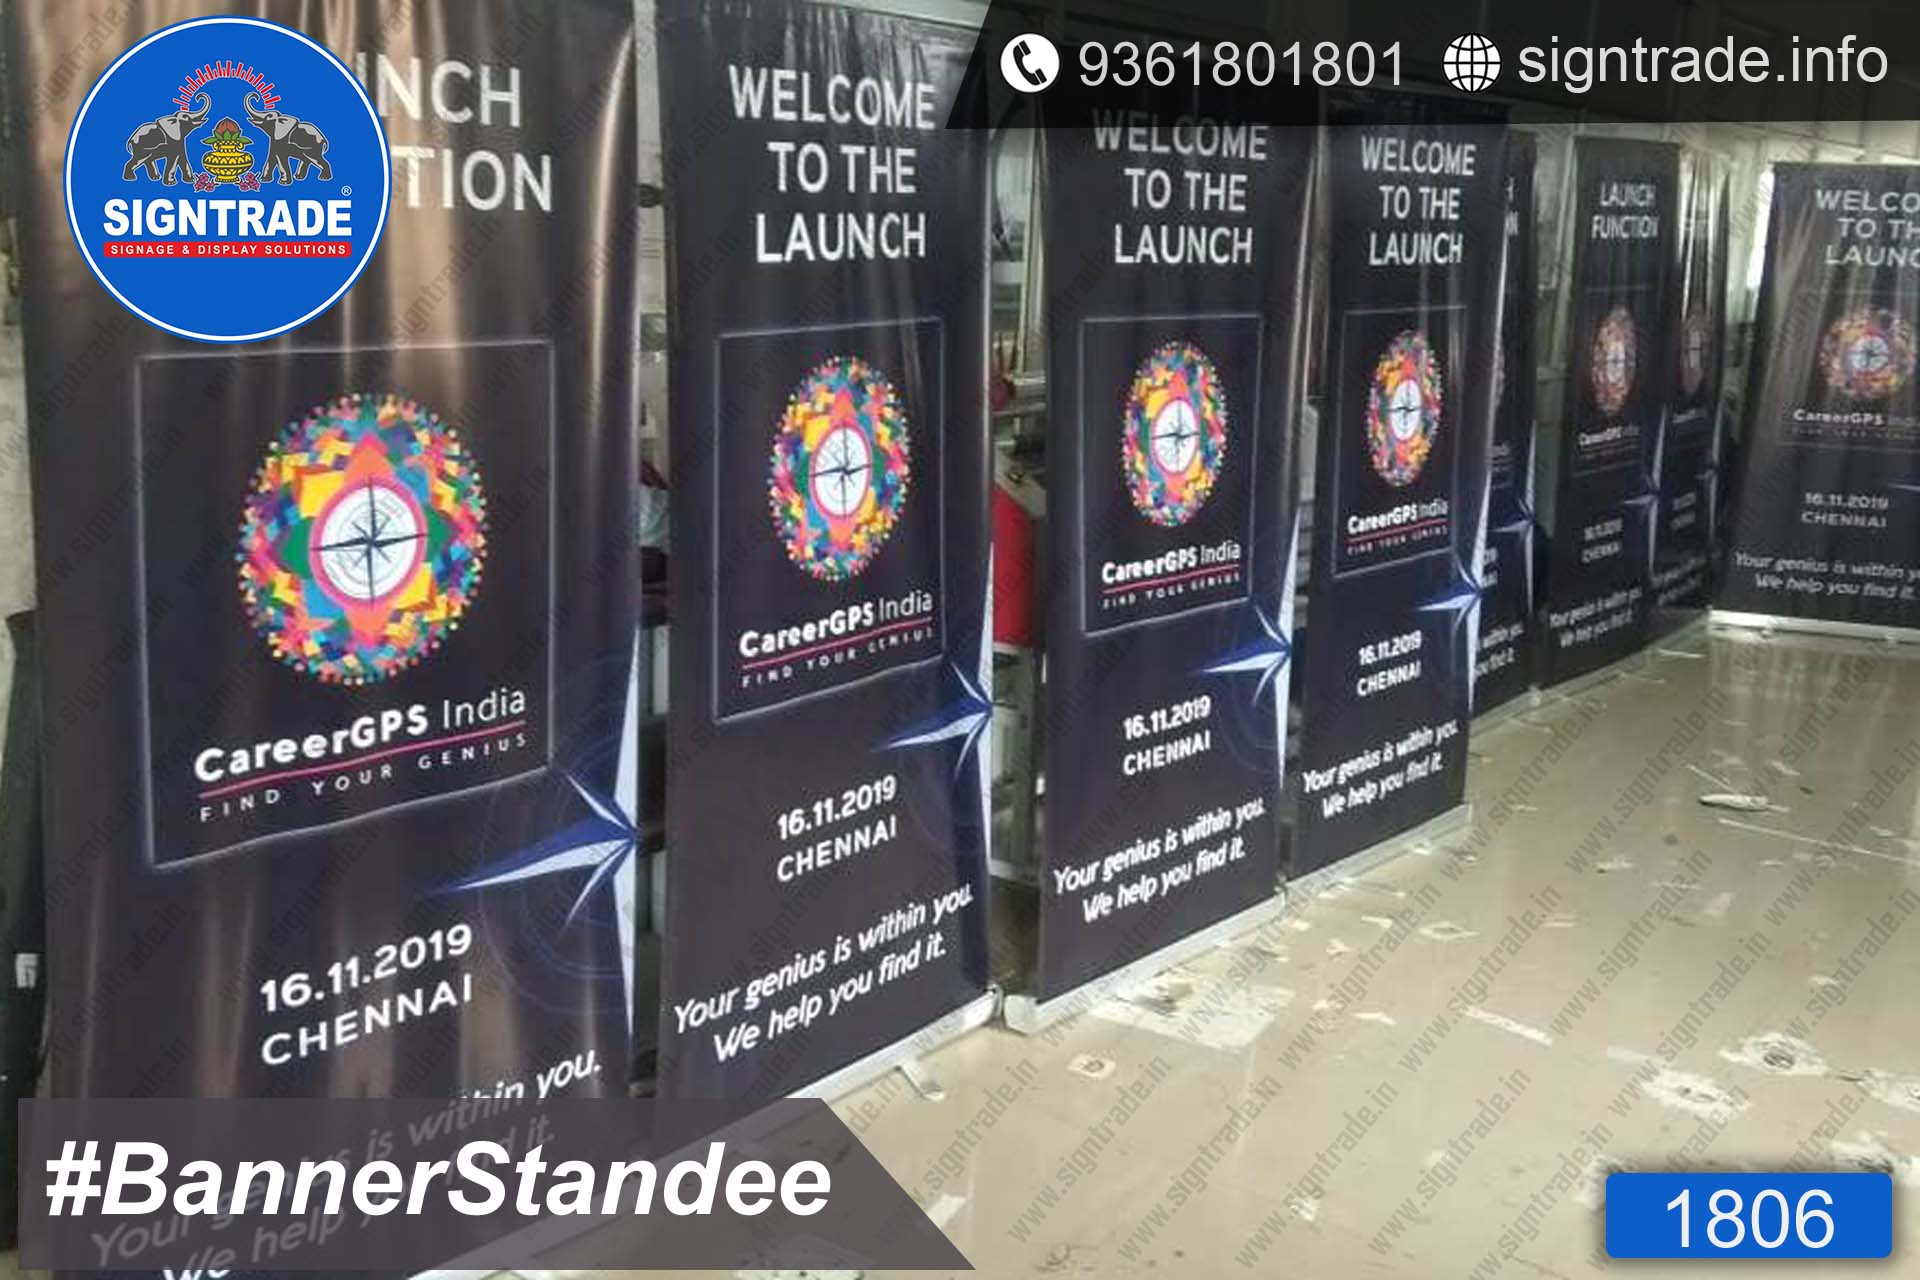 careergps india banner standee